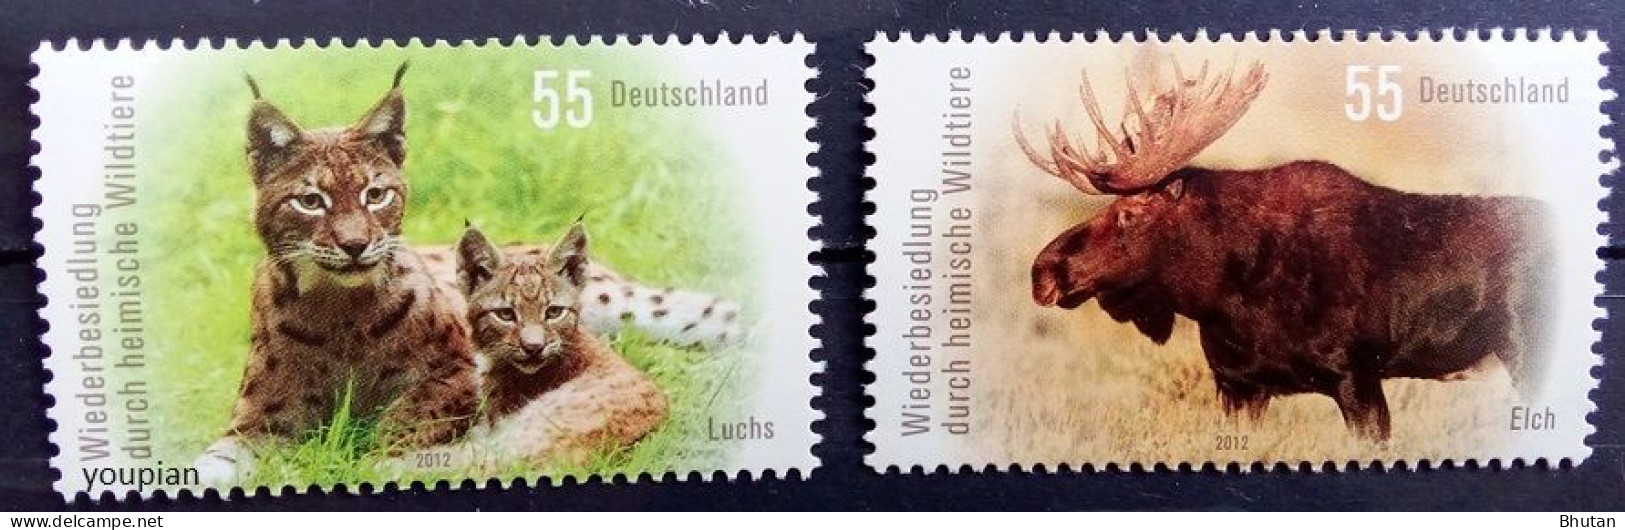 Germany 2012, Animals - Lynx And Elk, MNH Stamps Set - Ungebraucht